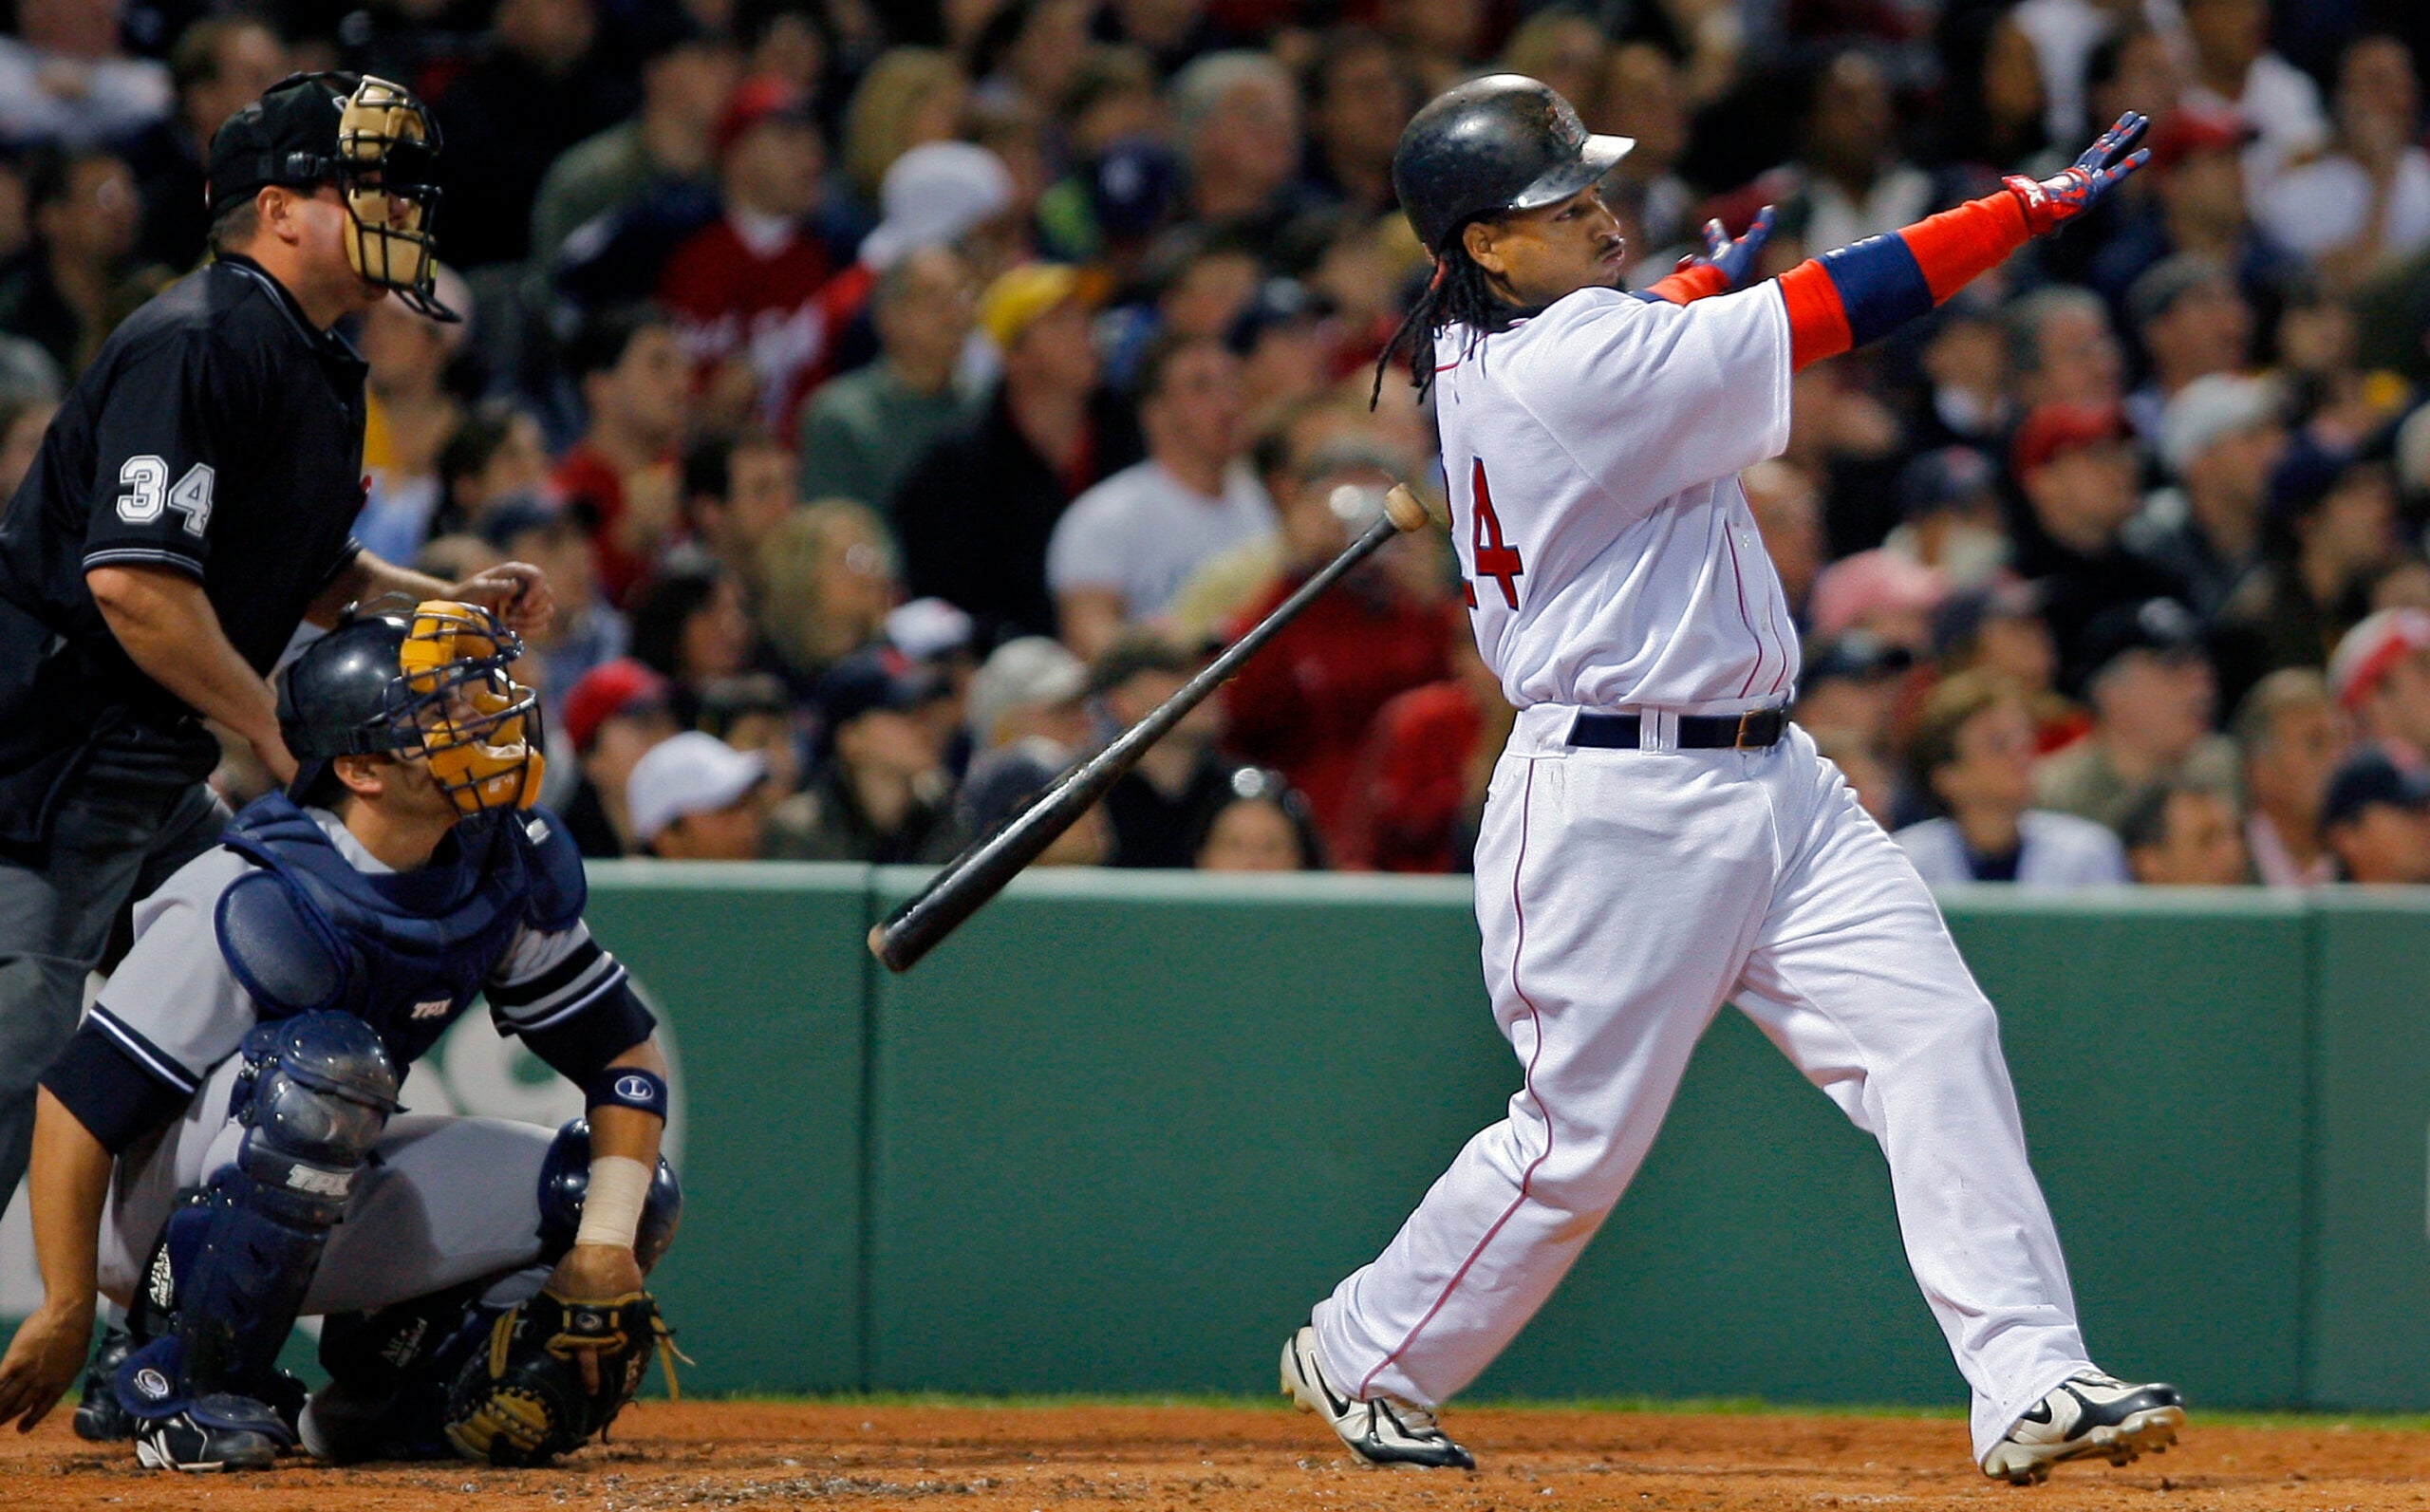 MLB rumors: Ex-Red Sox slugger Manny Ramirez is (kind of) making a